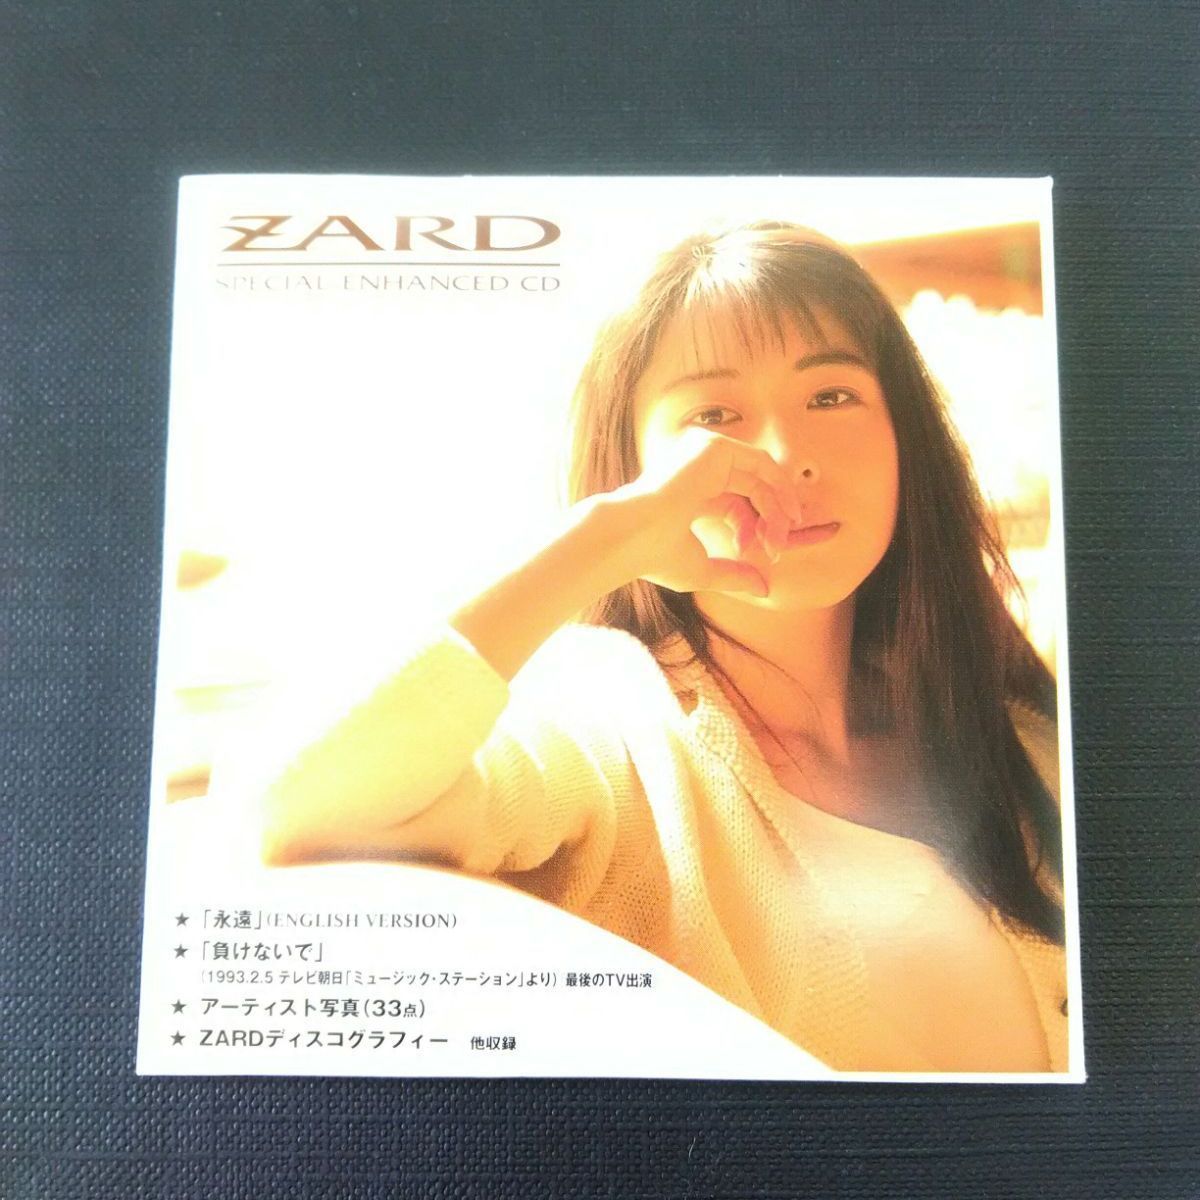 ZARD 坂井泉水 CDセット - 邦楽